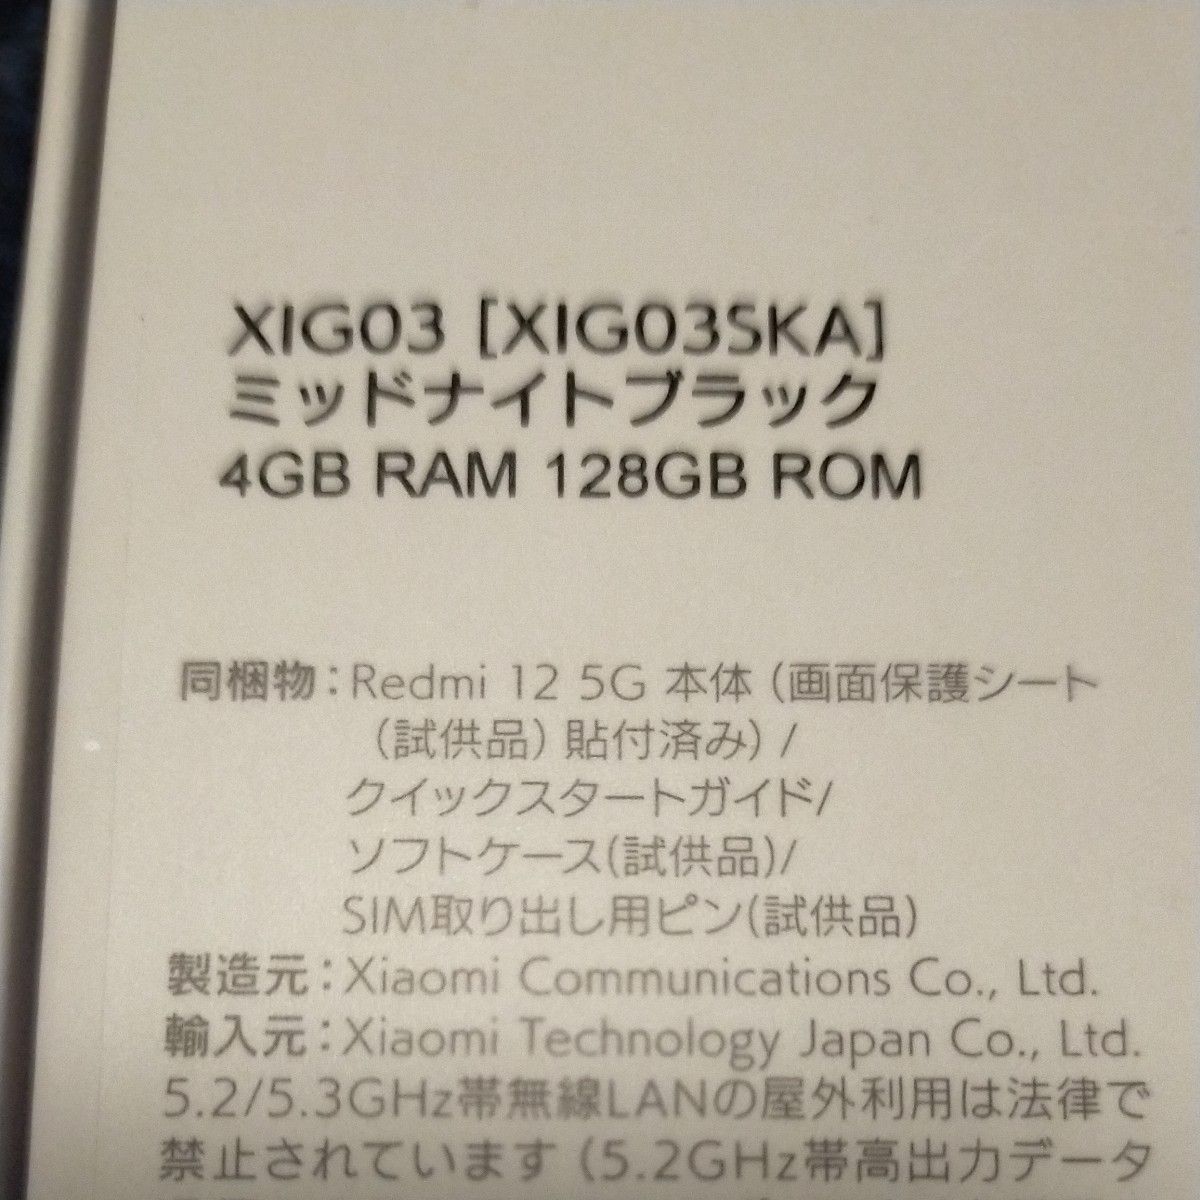 日本正式代理店 新品 未開封 Redmi 12 5G 本体 128GB 残債なし